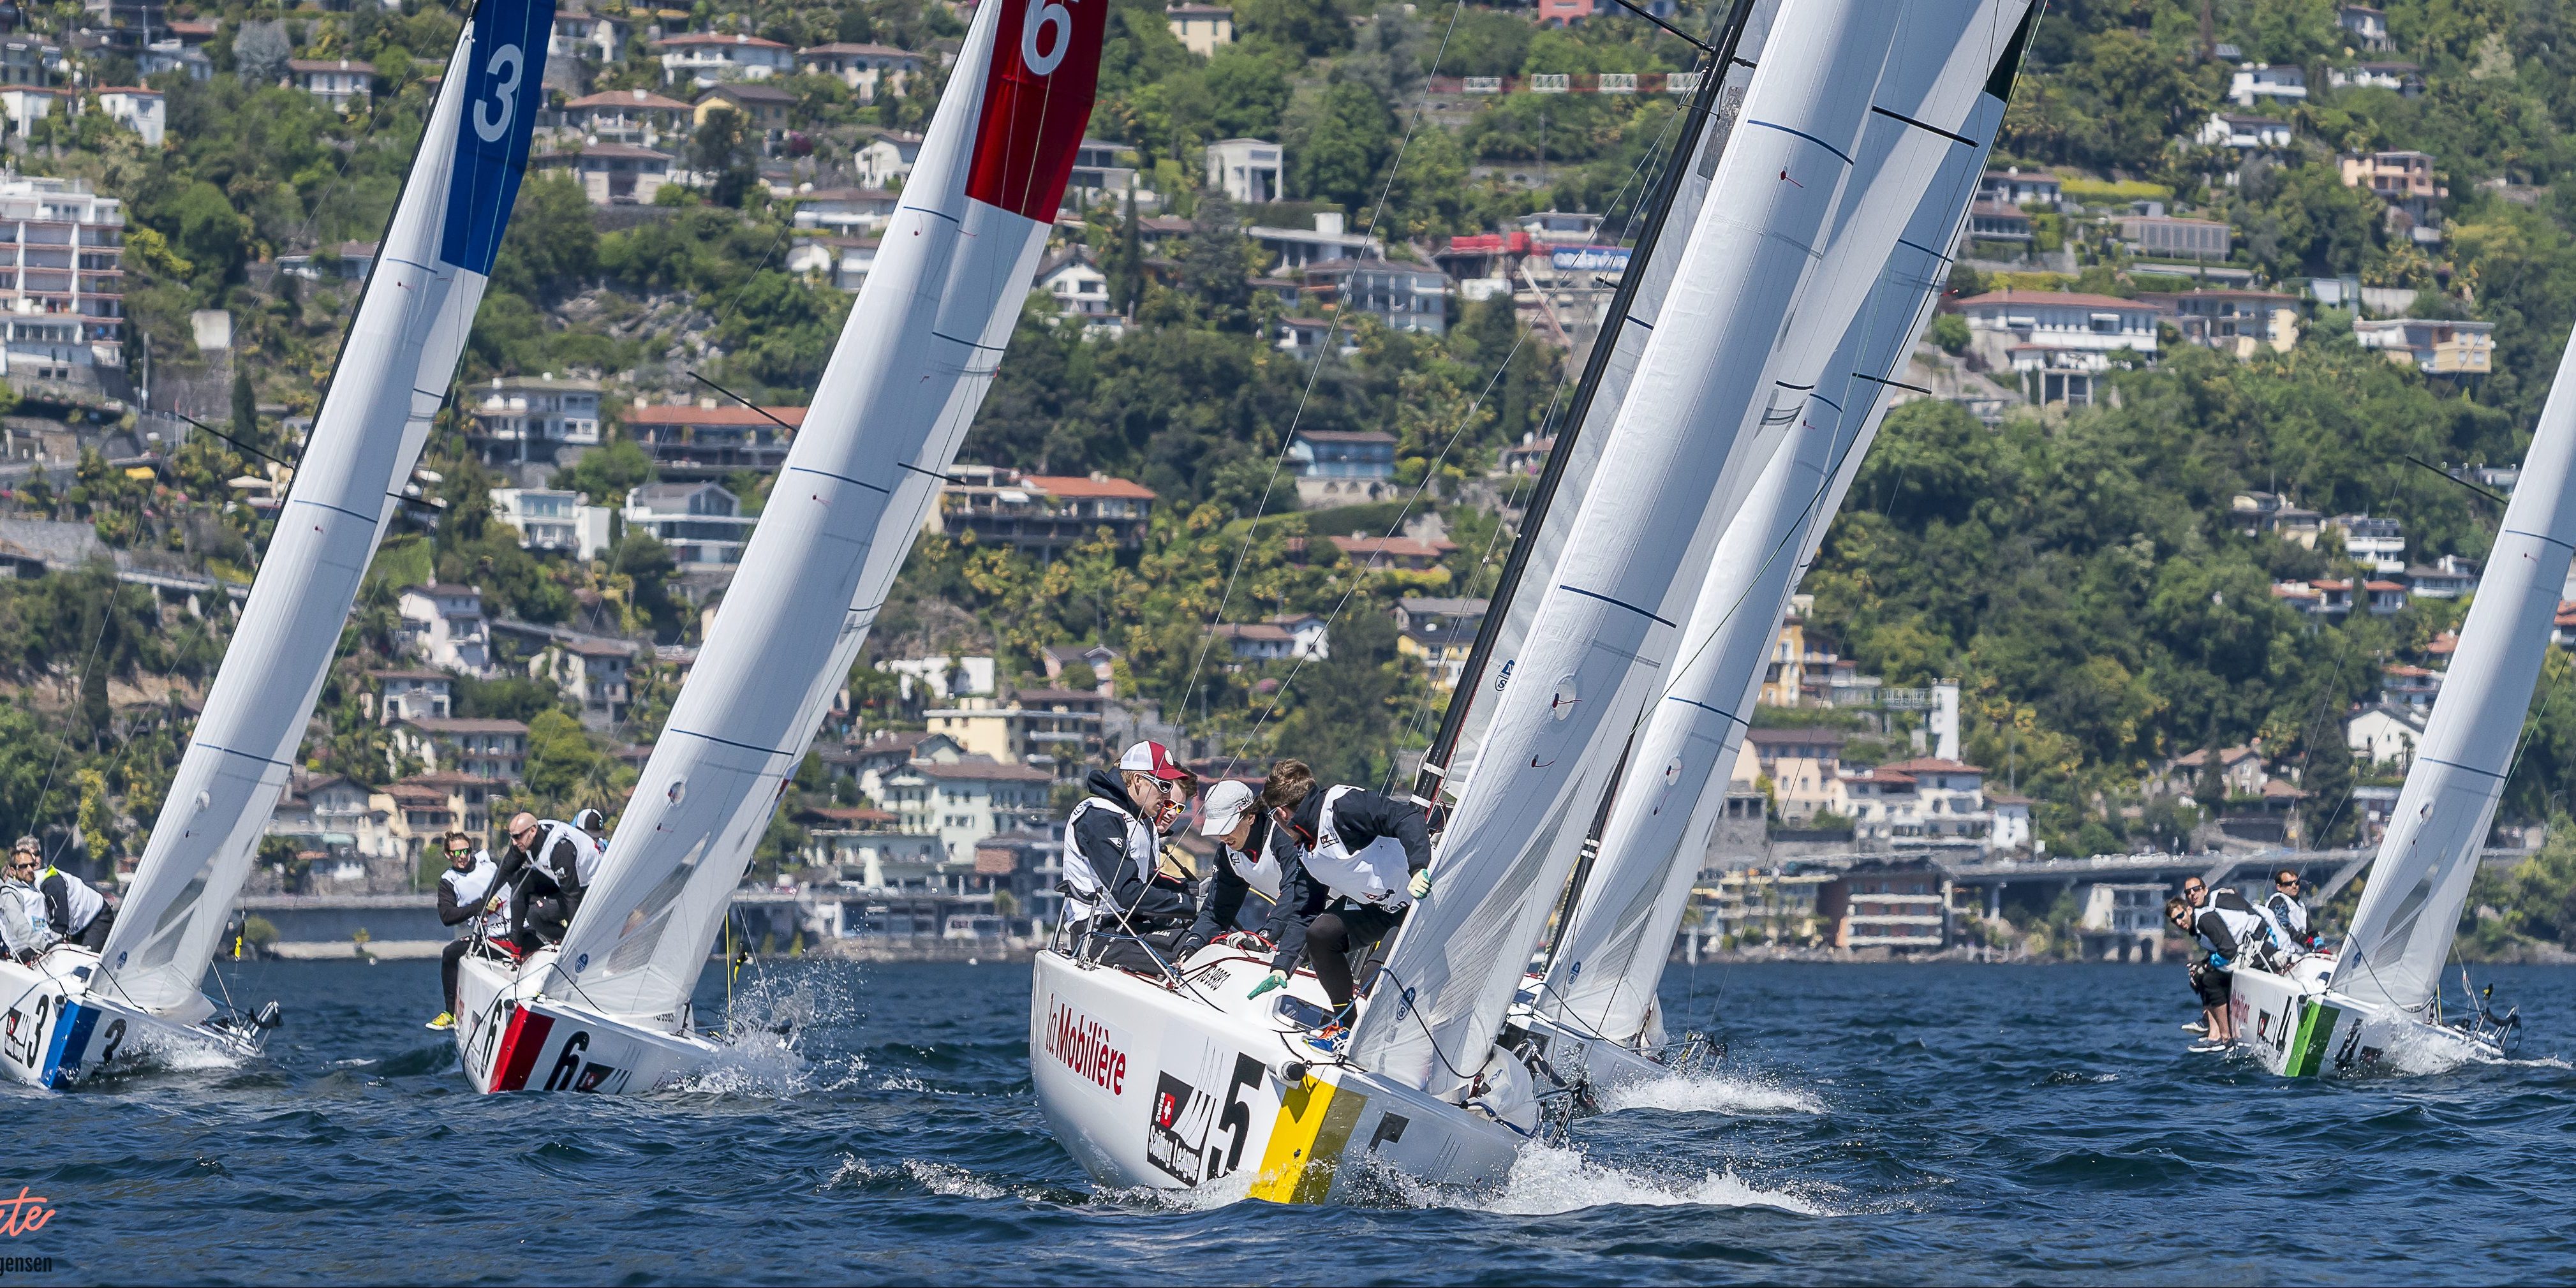  Swiss Sailing Super League  Locarno, Act 1  Heute Start